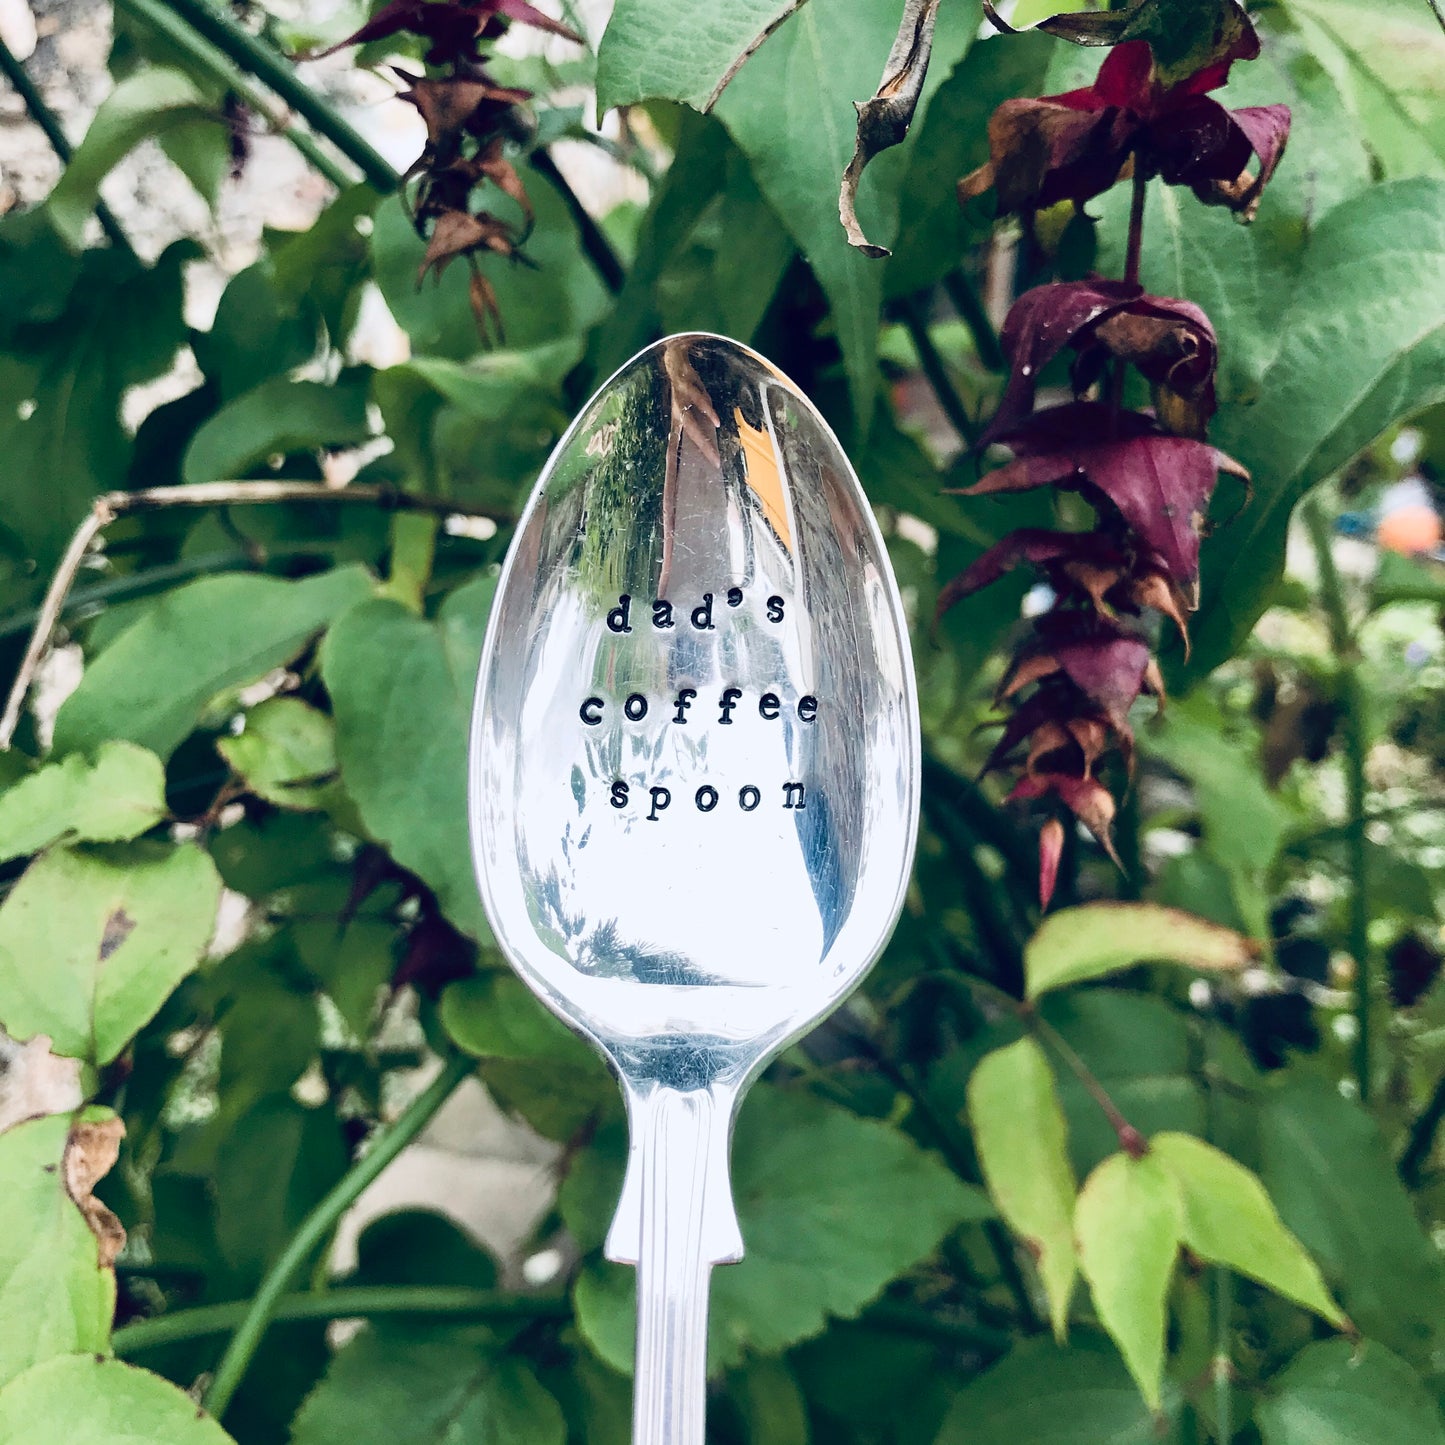 Dad’s Coffee Spoon - Vintage Dessert Spoon